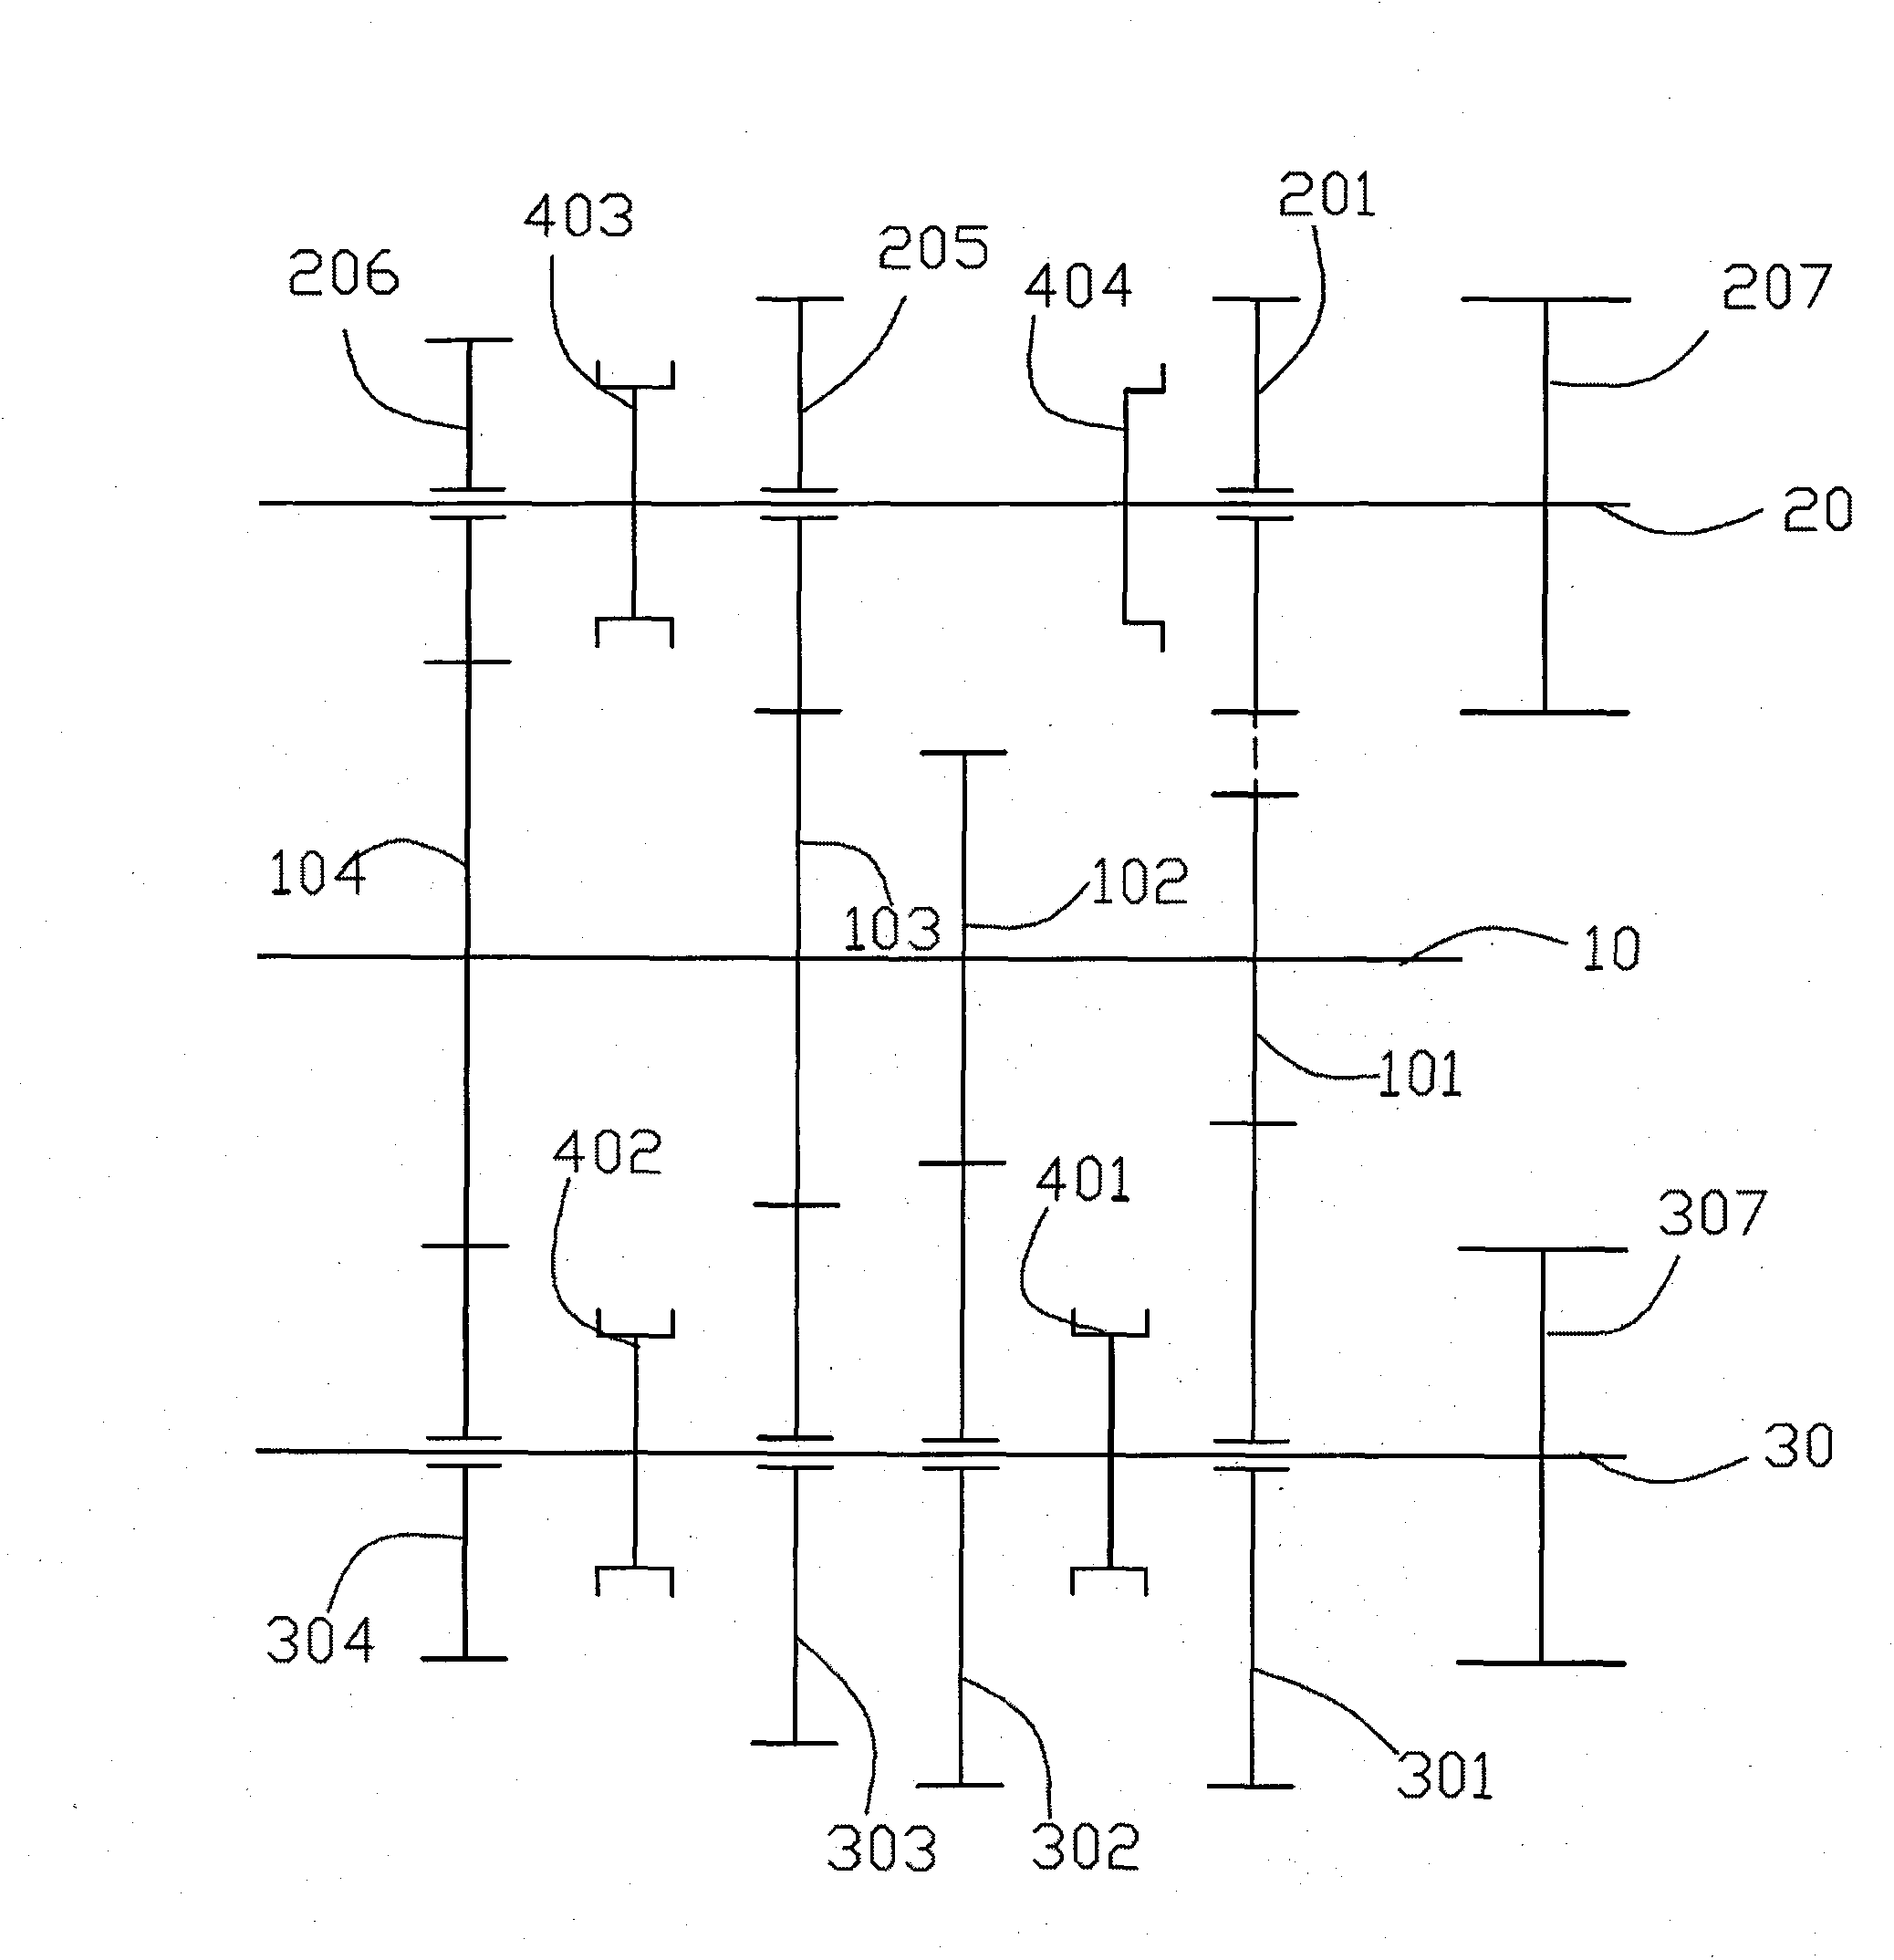 Arrangement structure of gearbox gear shaft system